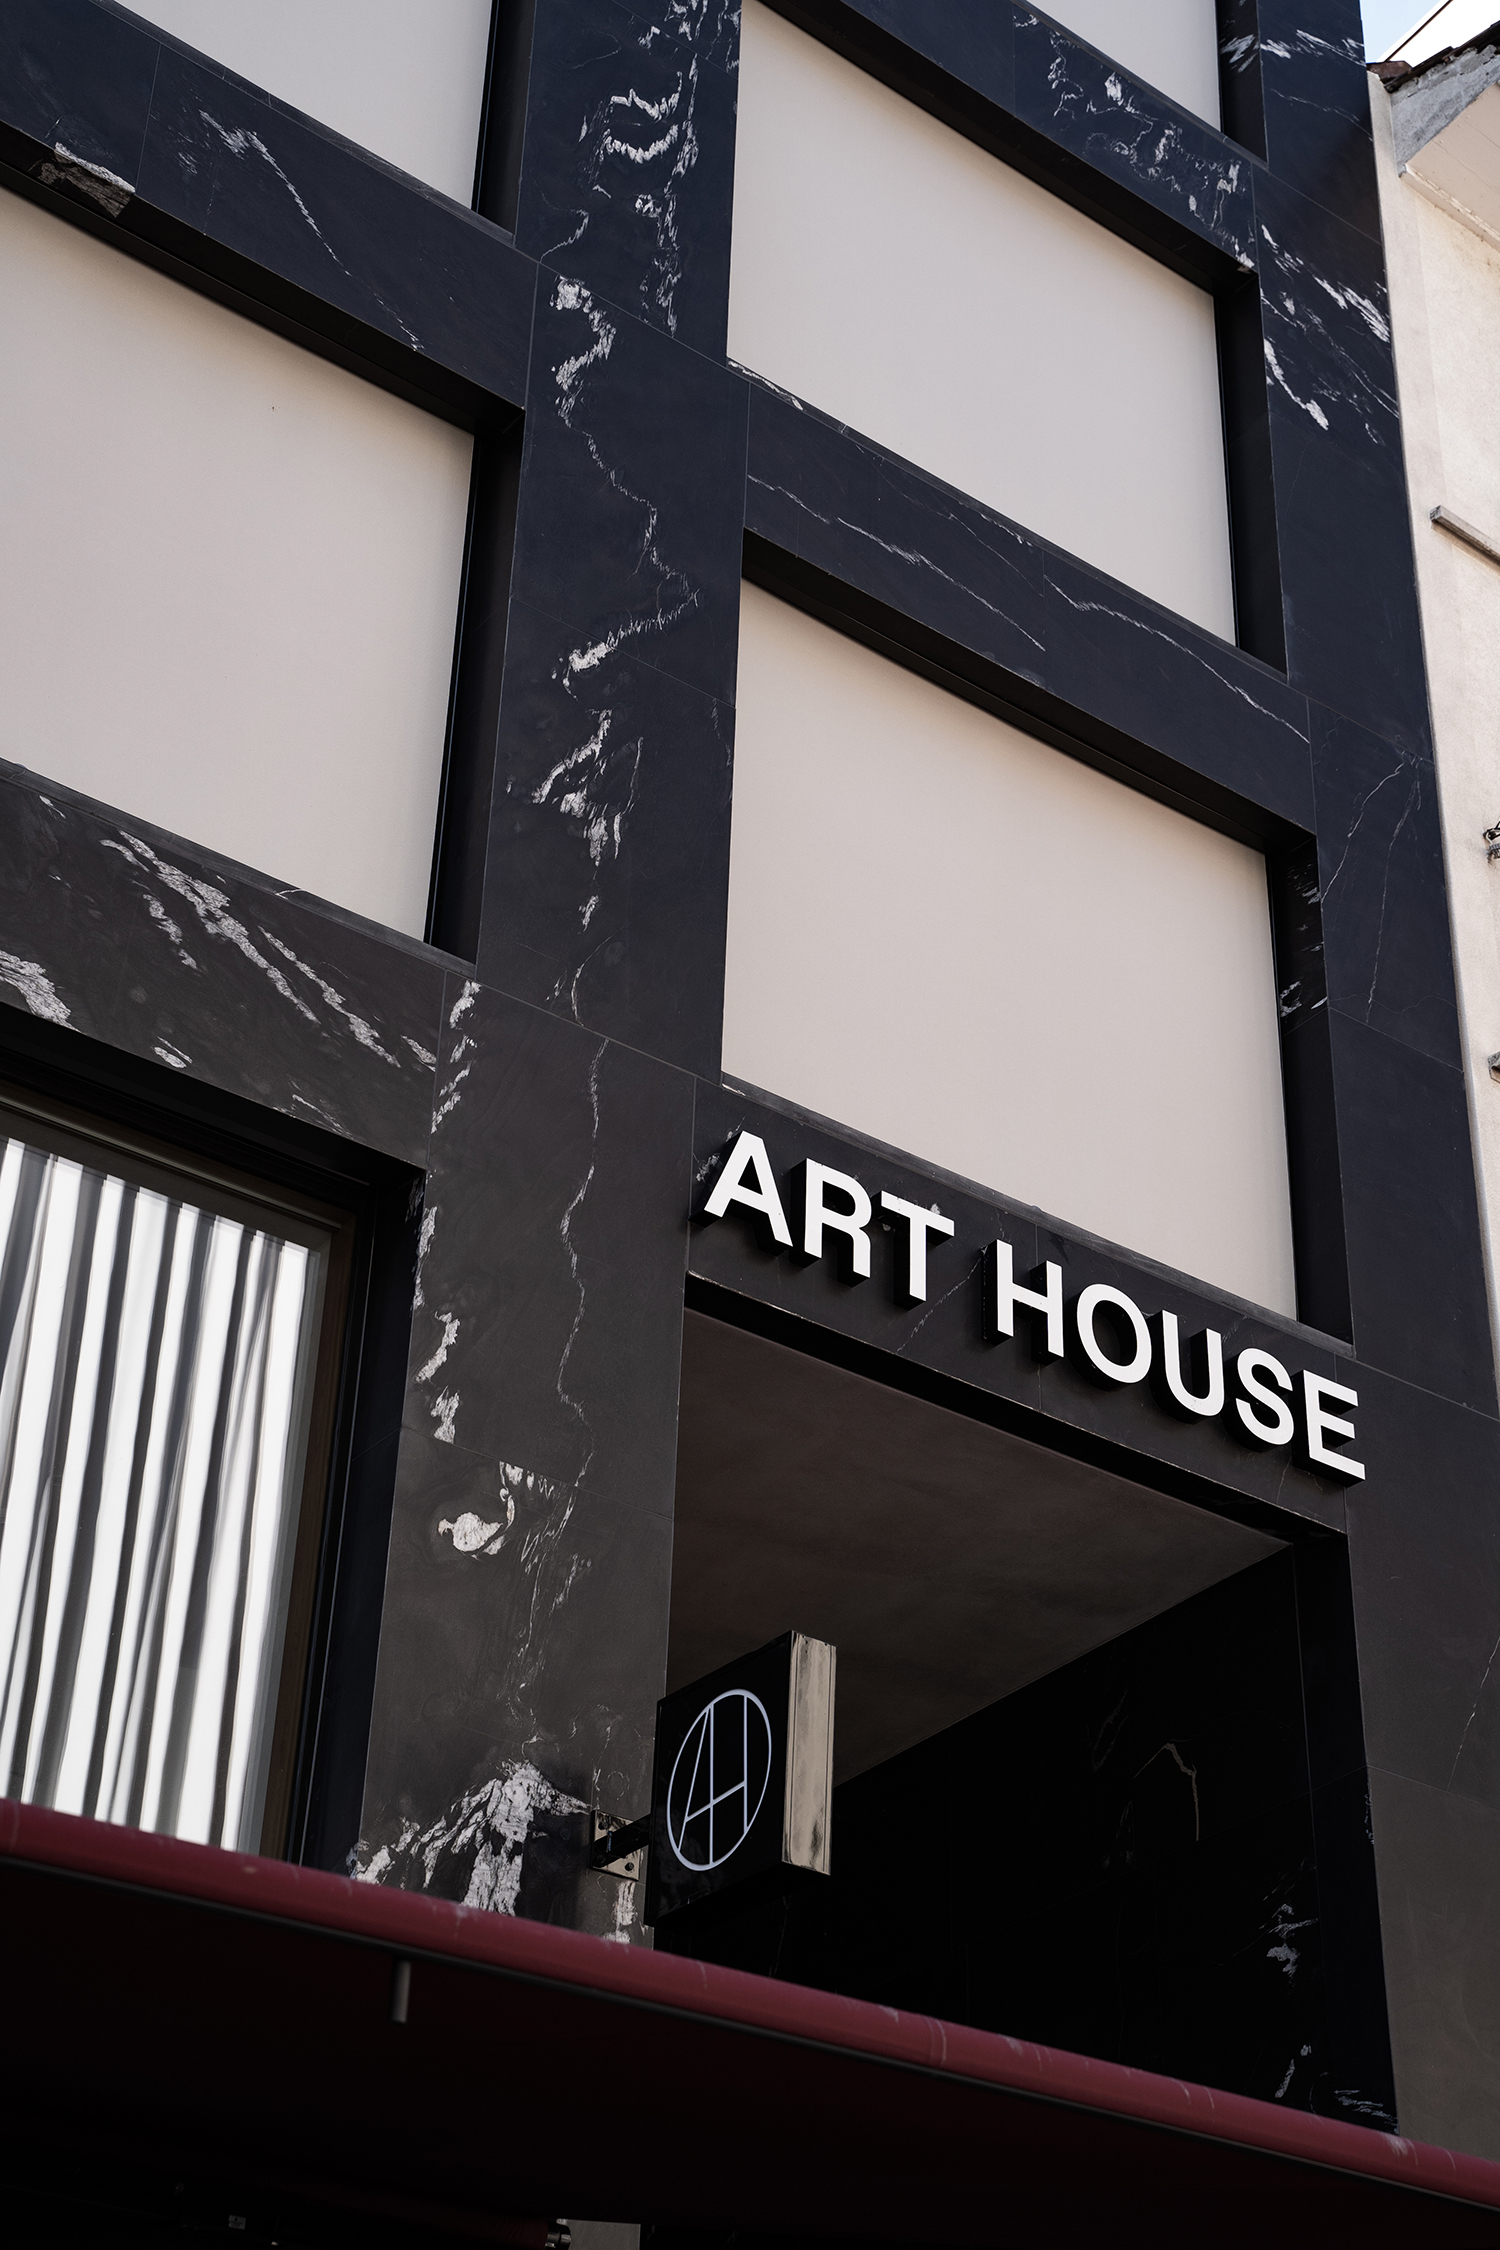 Art House Basel Hotel, Switzerland / Diener & Diener + Andrea Caputo and Salomé Fäh